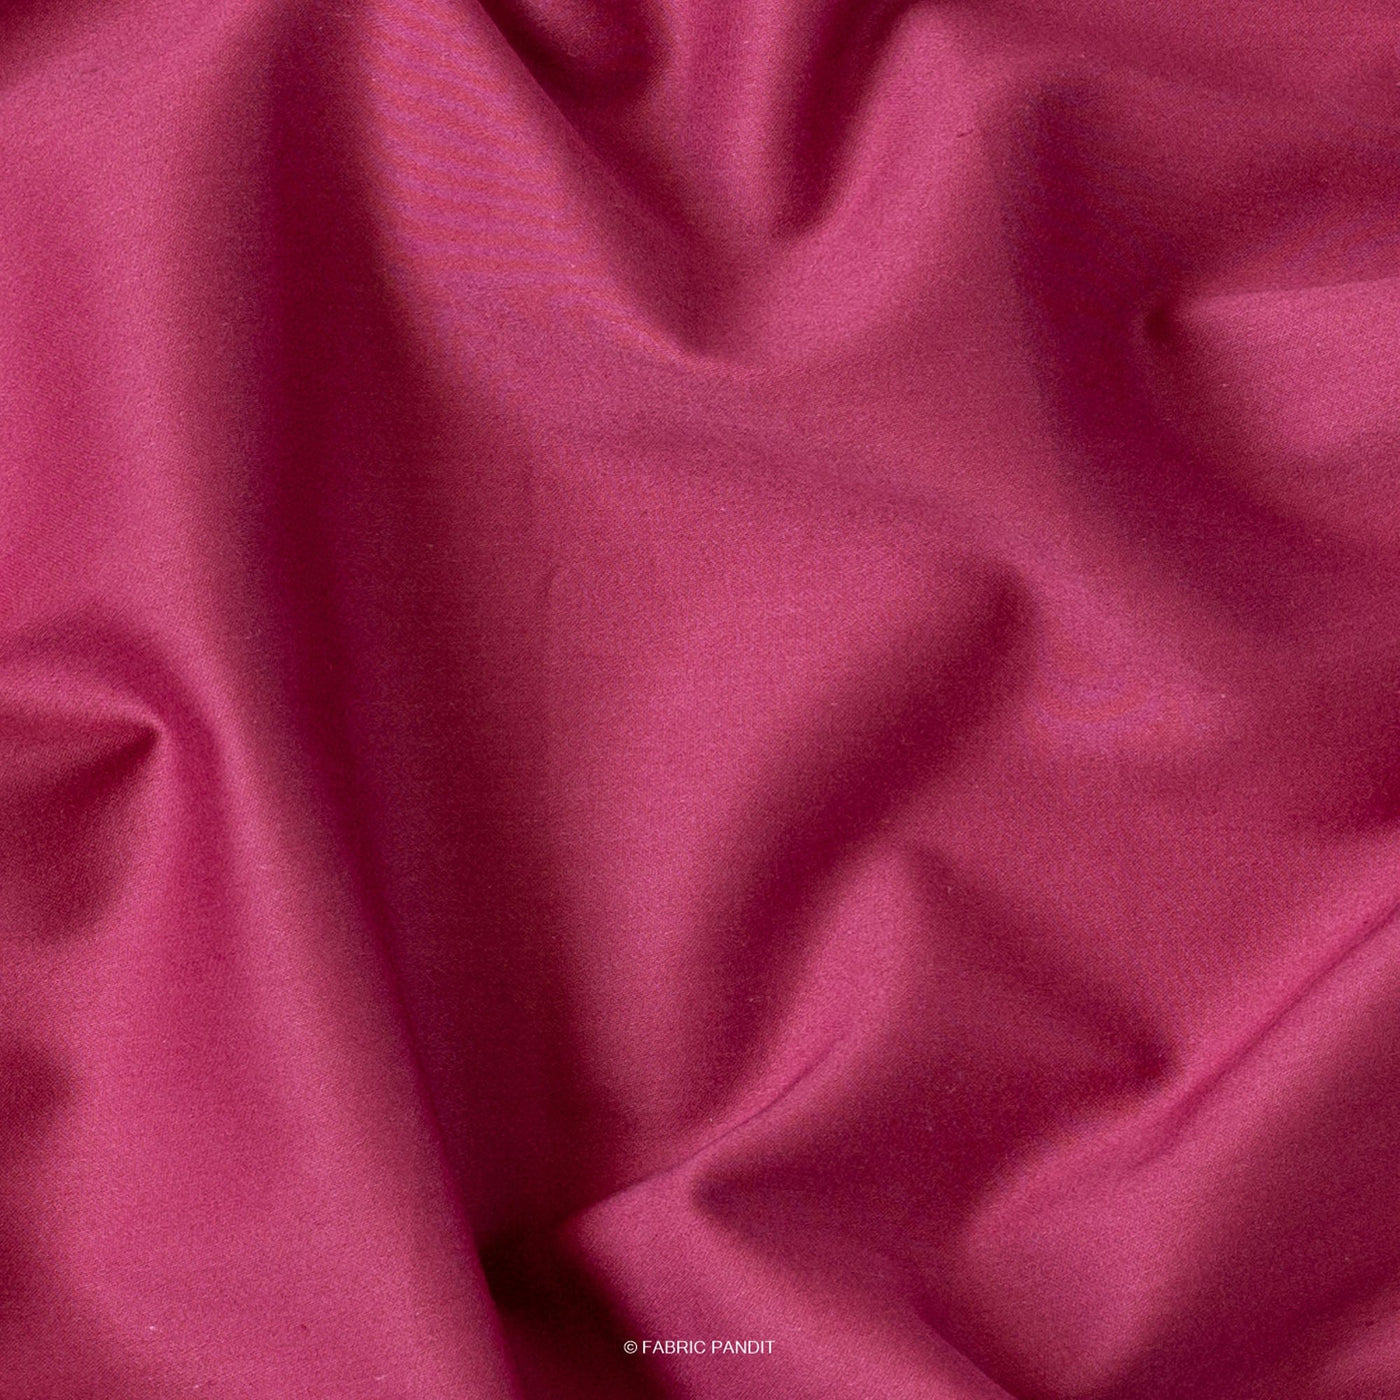 Fabric Pandit Cut Piece 1.00M (CUT PIECE) Rouge Pink Pure Cotton Lycra Stretch Men's Shirt Fabric (Width 54 inch)